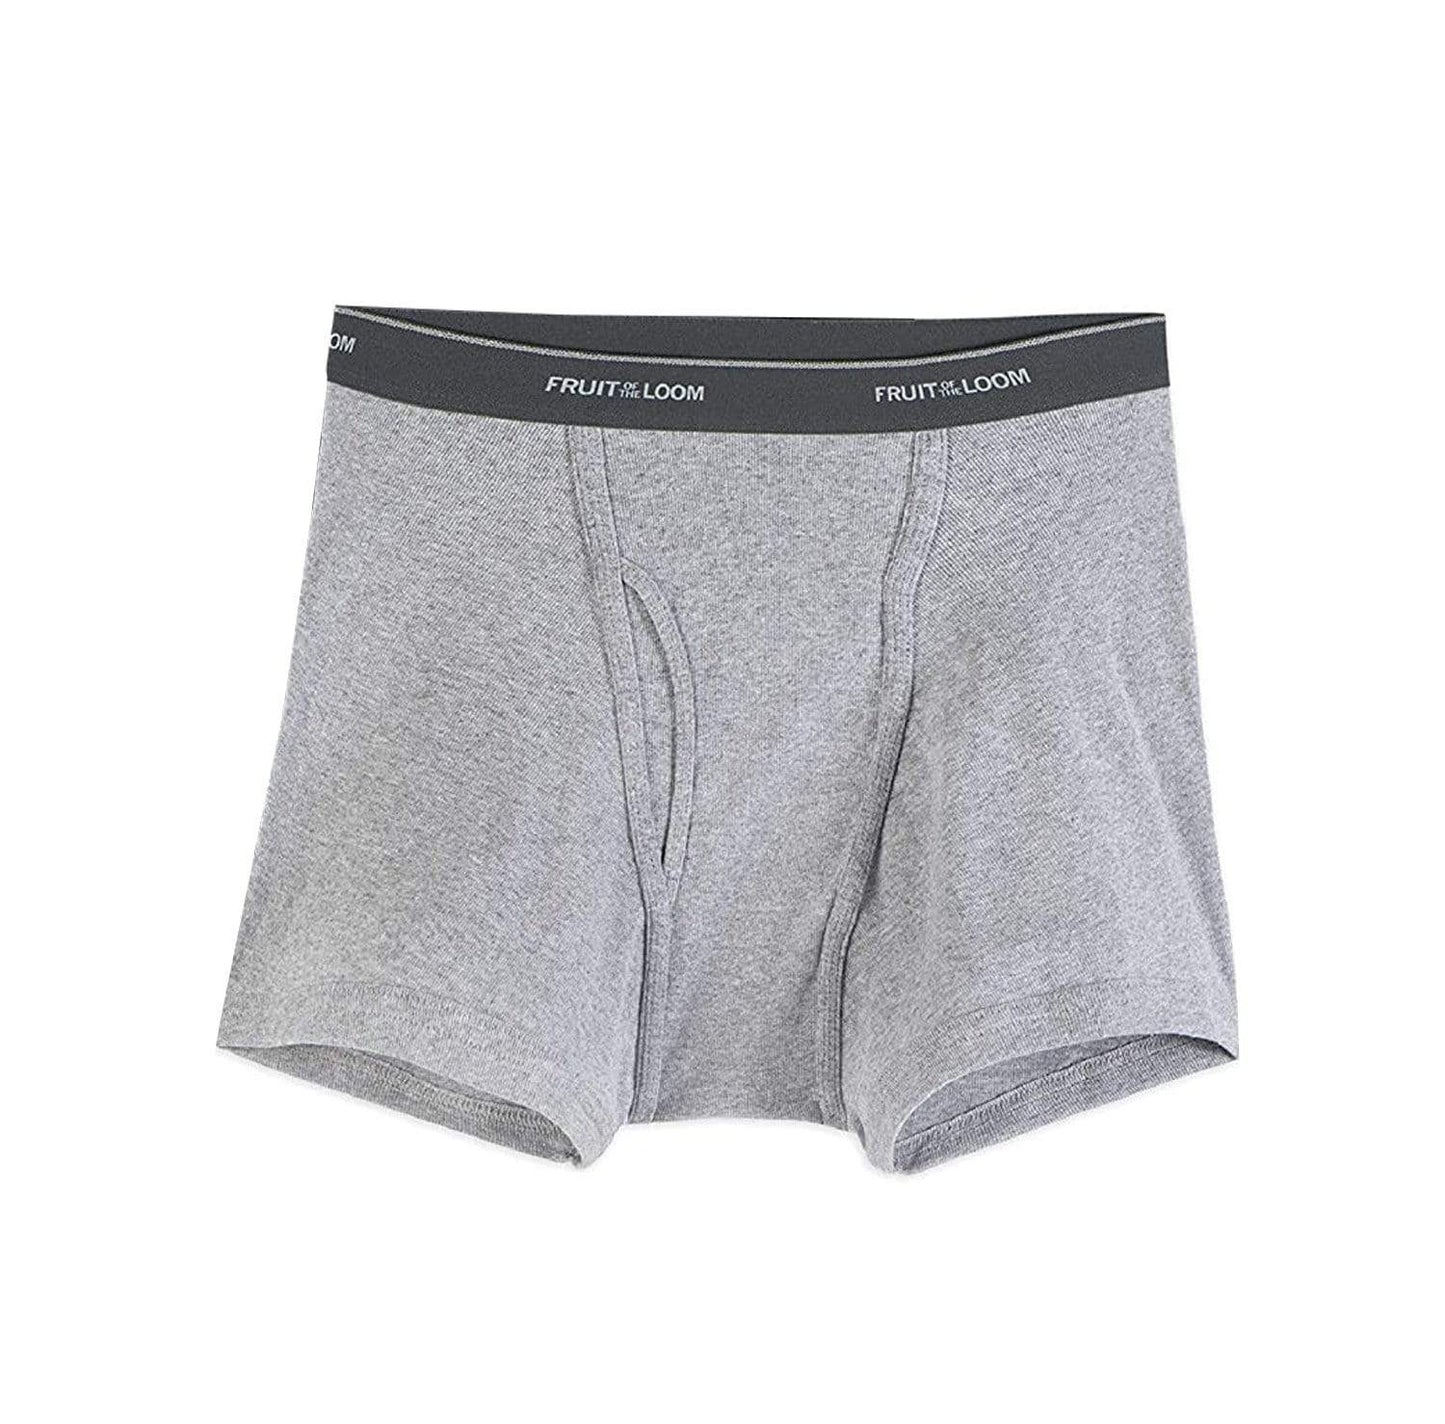 FRUIT OF THE LOOM Mens Underwear XL / Grey FRUIT OF THE LOOM - Short Leg Boxer